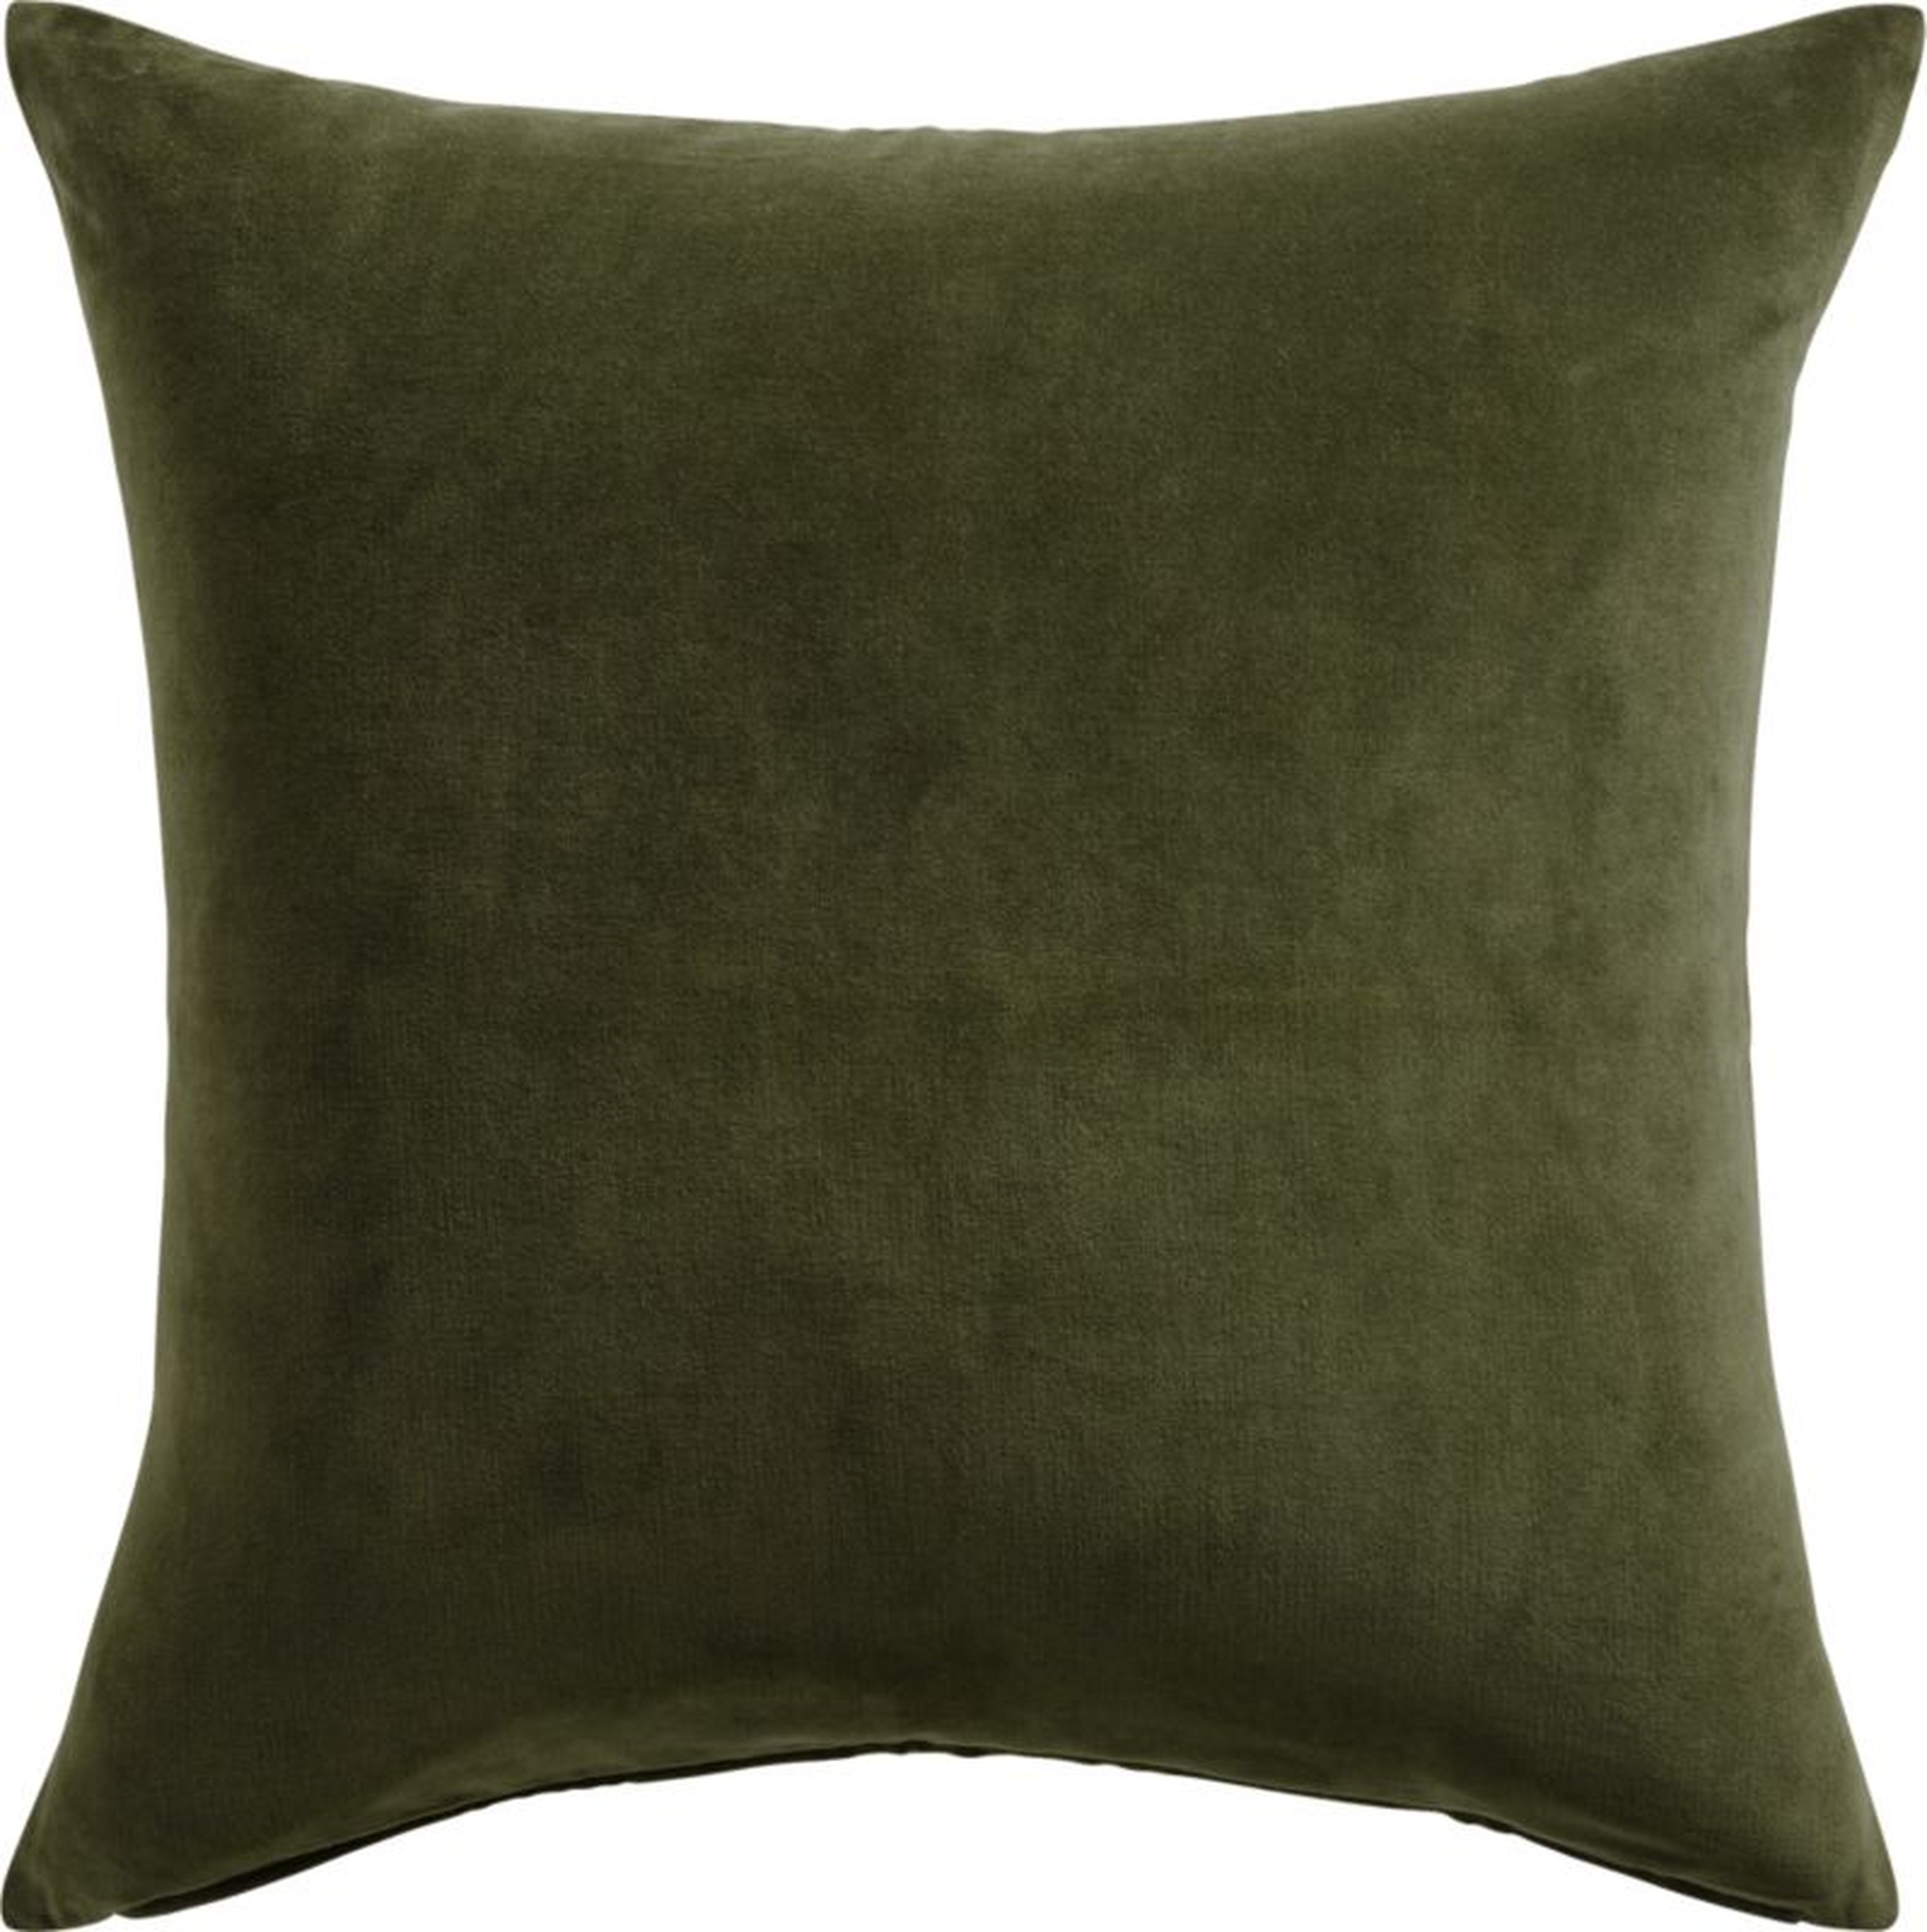 Leisure Pillow, Down-Alternative Insert, Olive Green, 23" x 23" - CB2